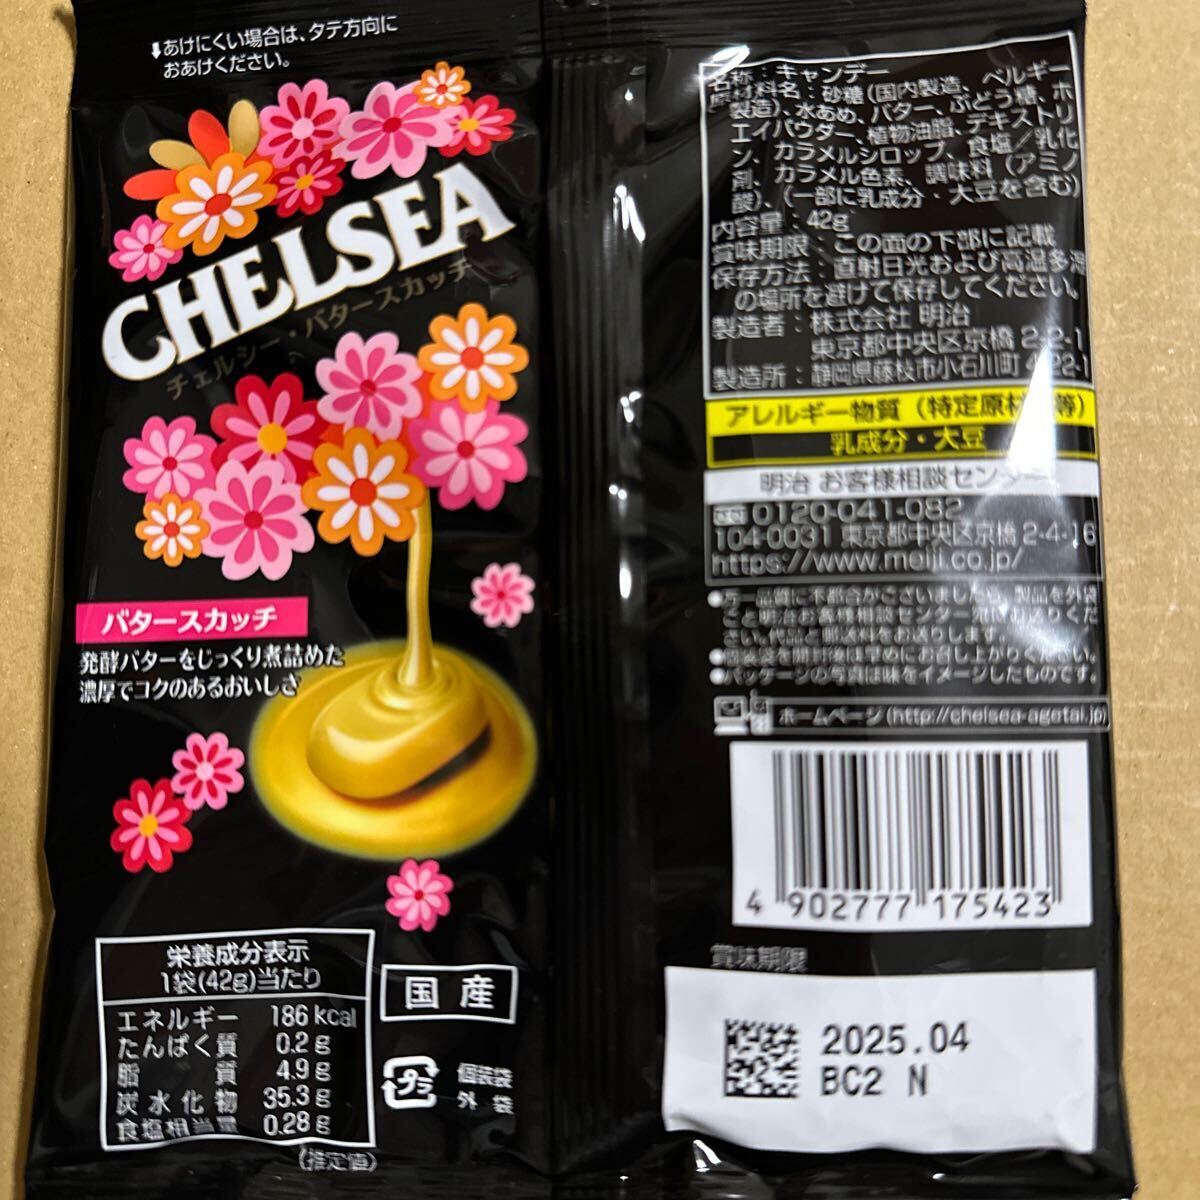  Chelsea yoghurt ska chi butter ska chi coffee ska chi3 sack set Meiji Chelsea sweets CHELSEA